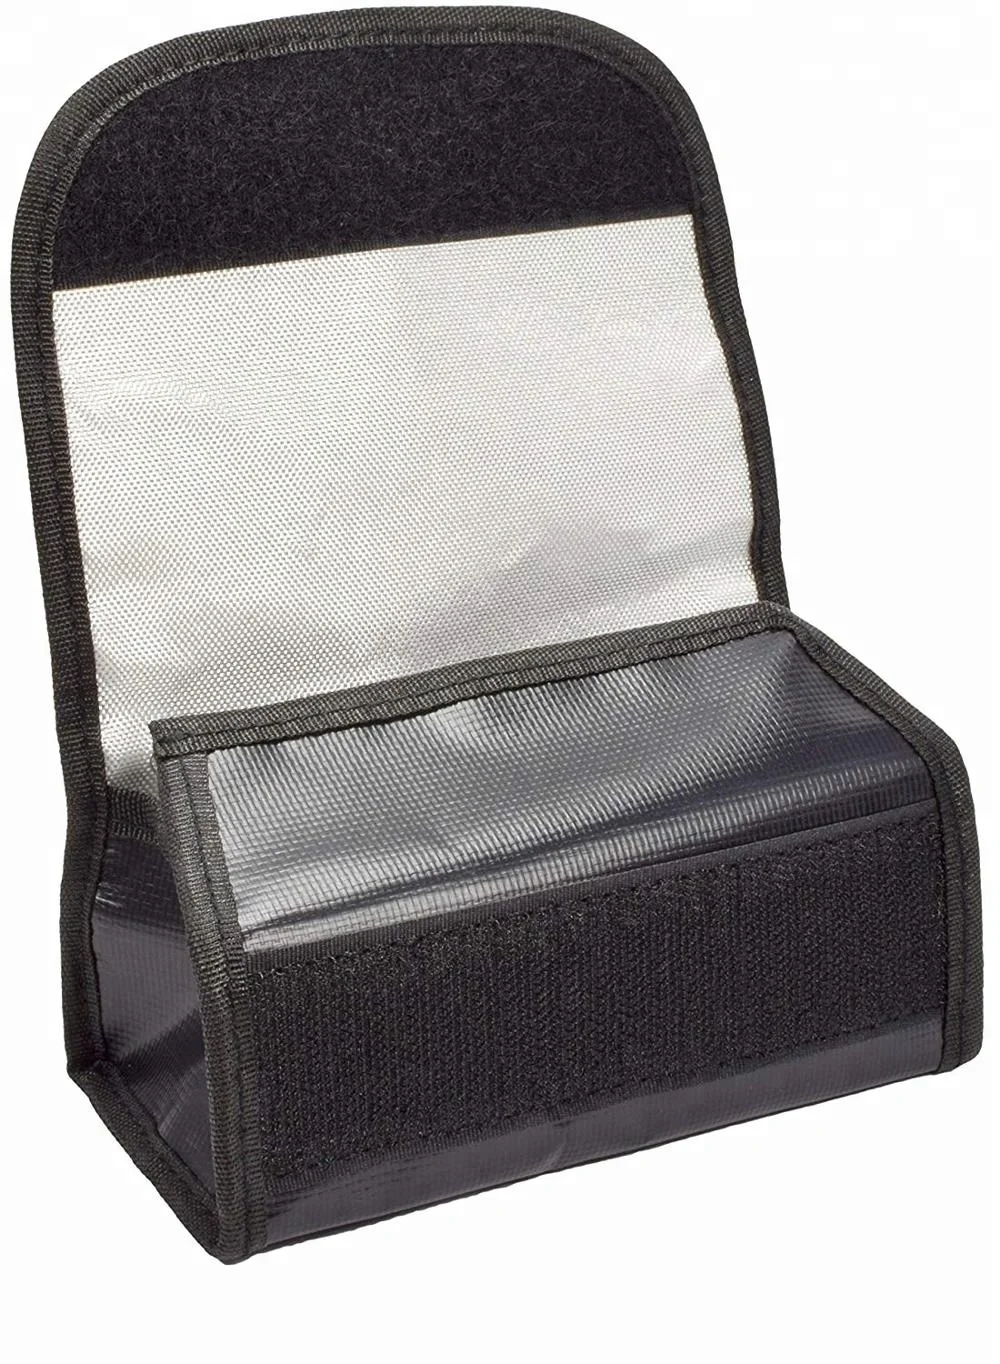 
Mini Explosion-proof Fireproof Lipo Guard Document Bag Lipo Safe Battery Warmer Bag 